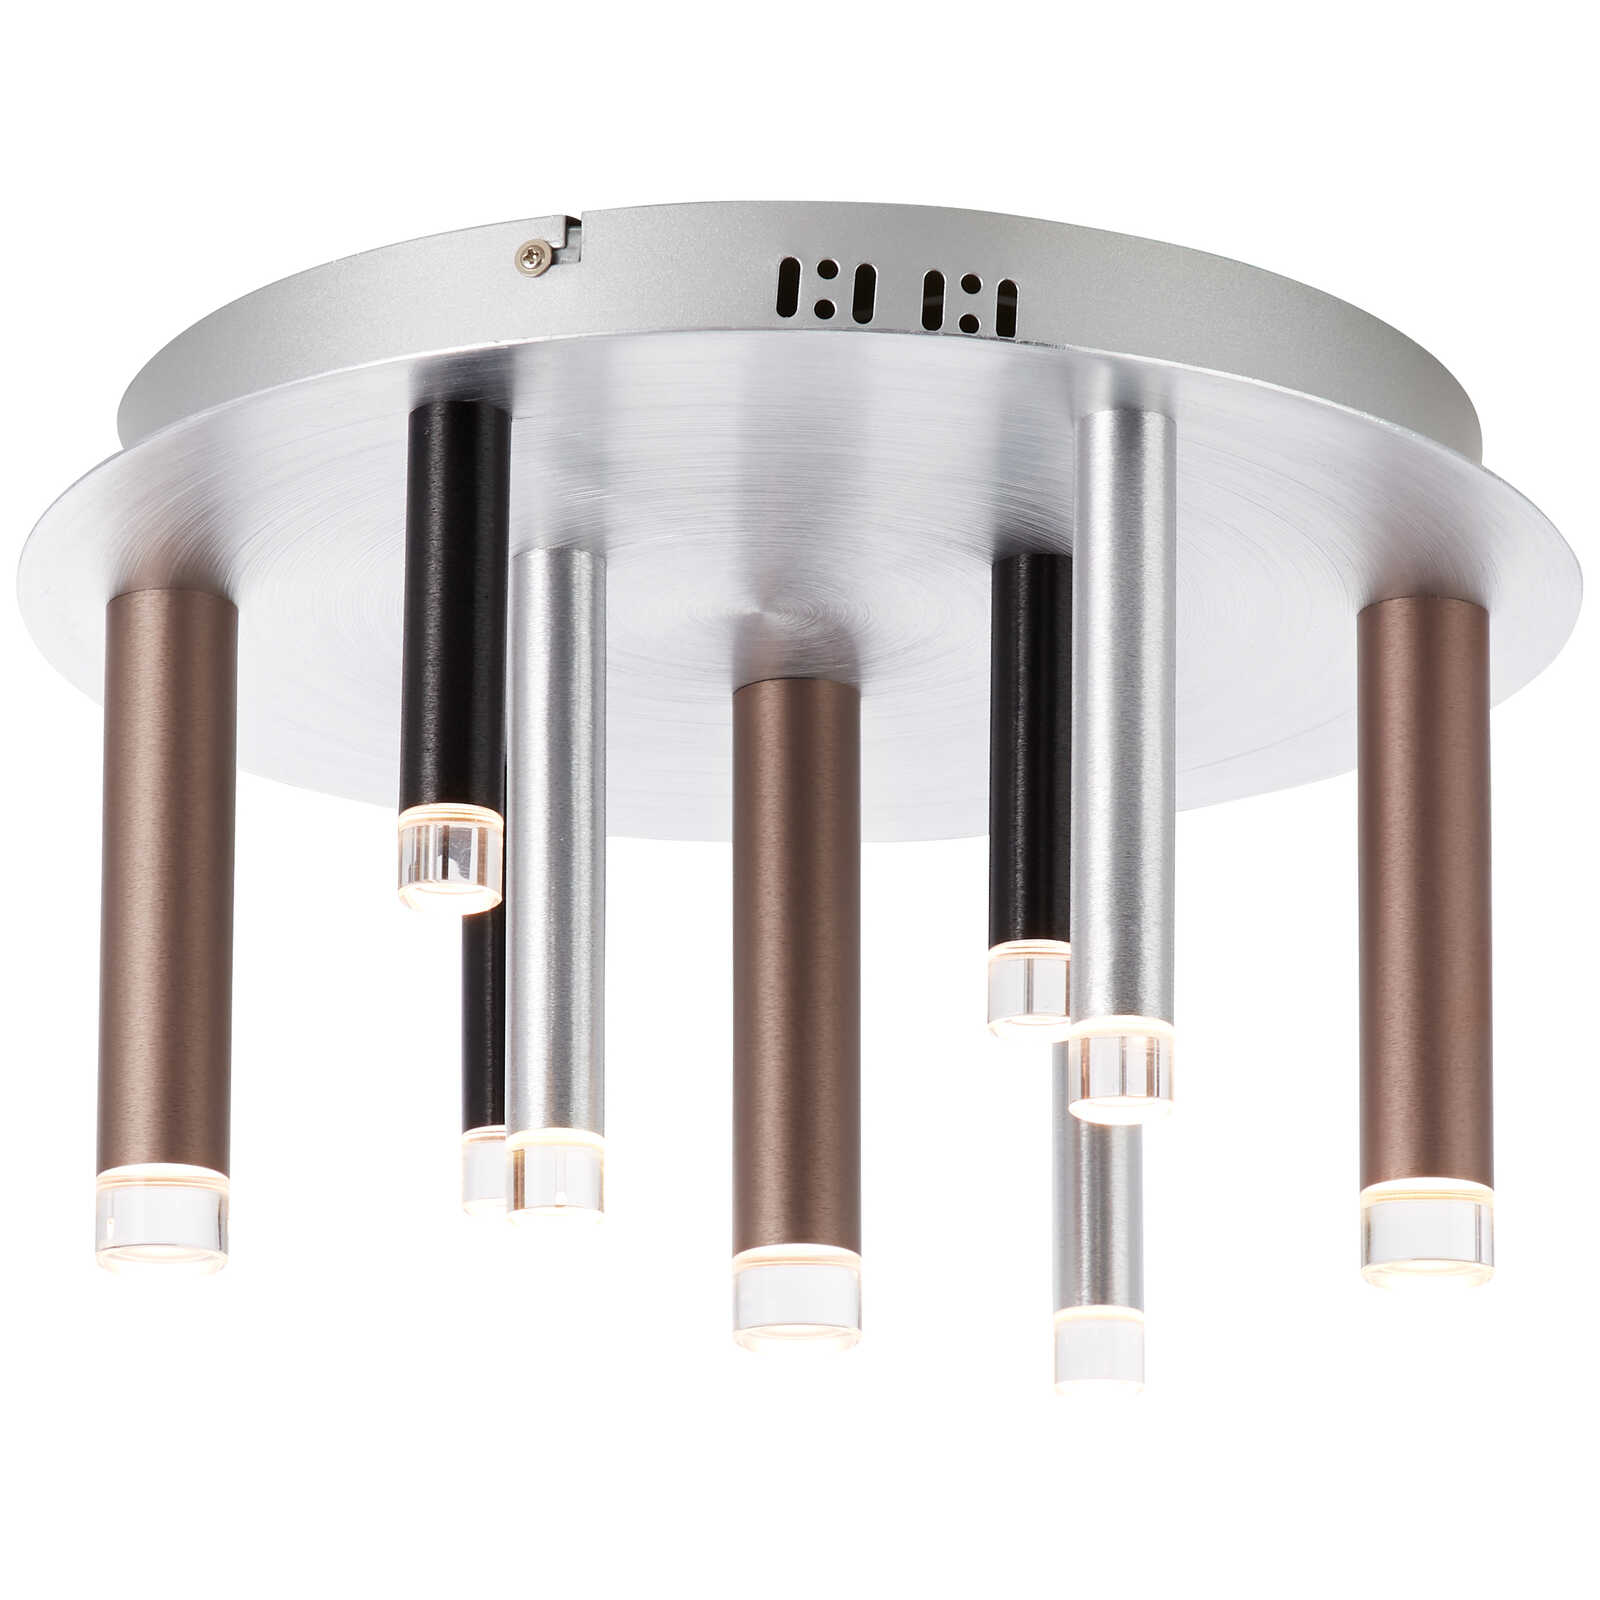             Metalen plafondlamp - Eddy 4 - Bruin
        